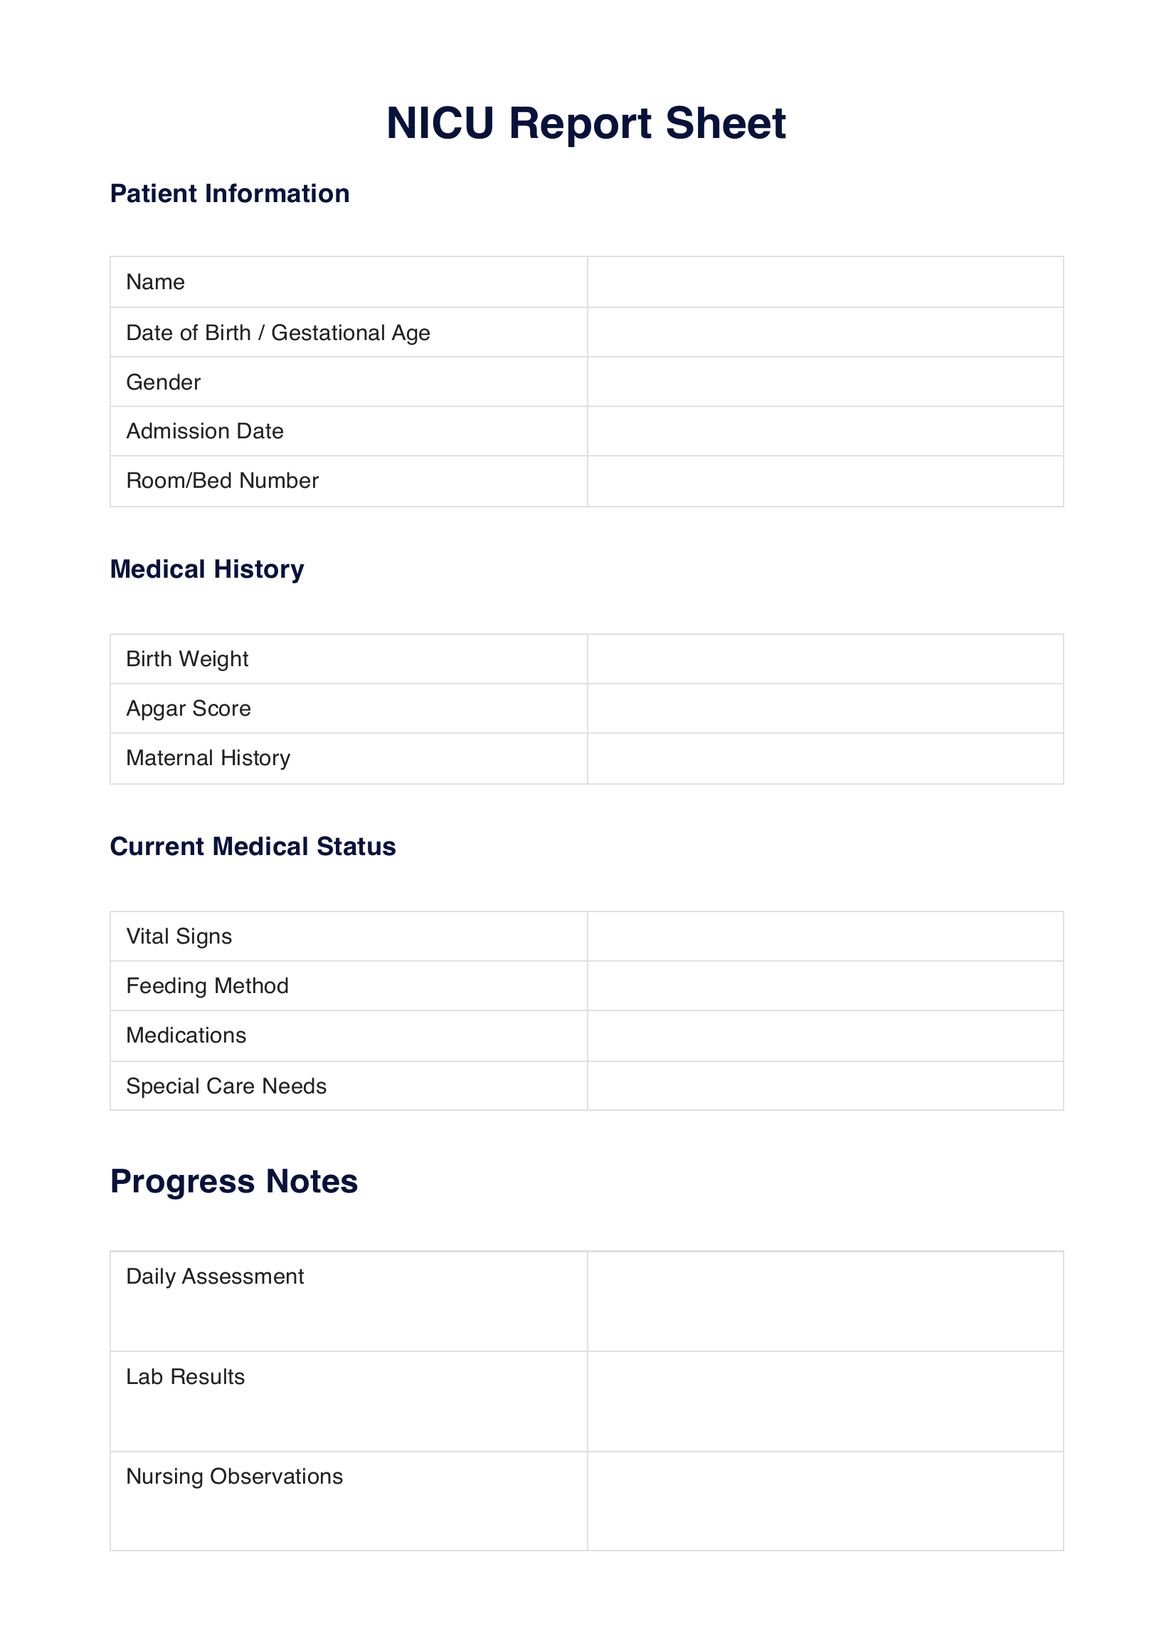 NICU Report Sheet PDF Example